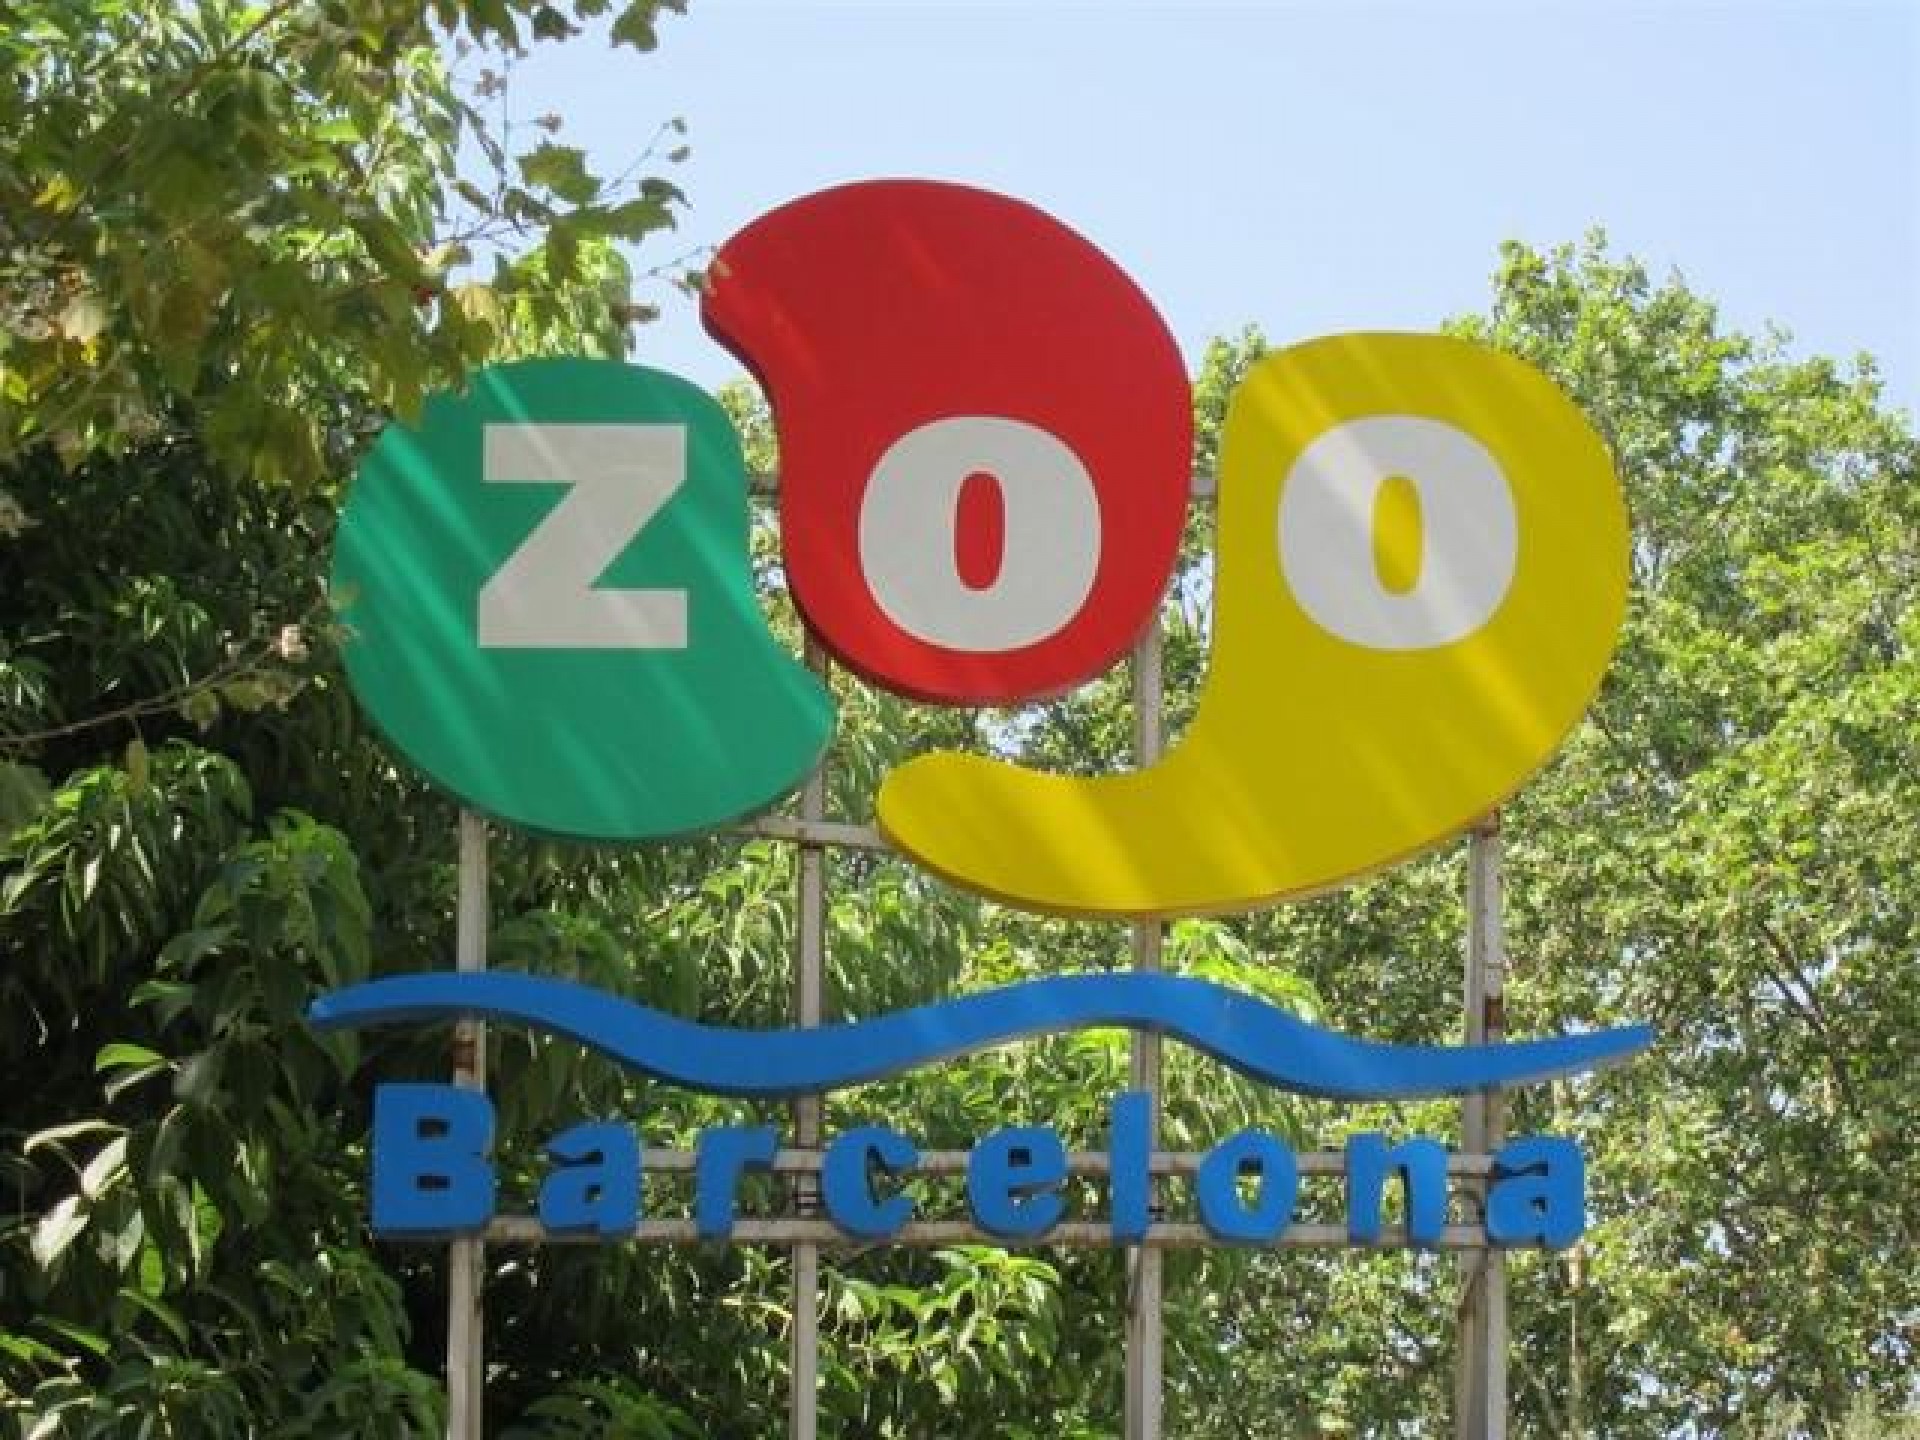 Zoo BCN